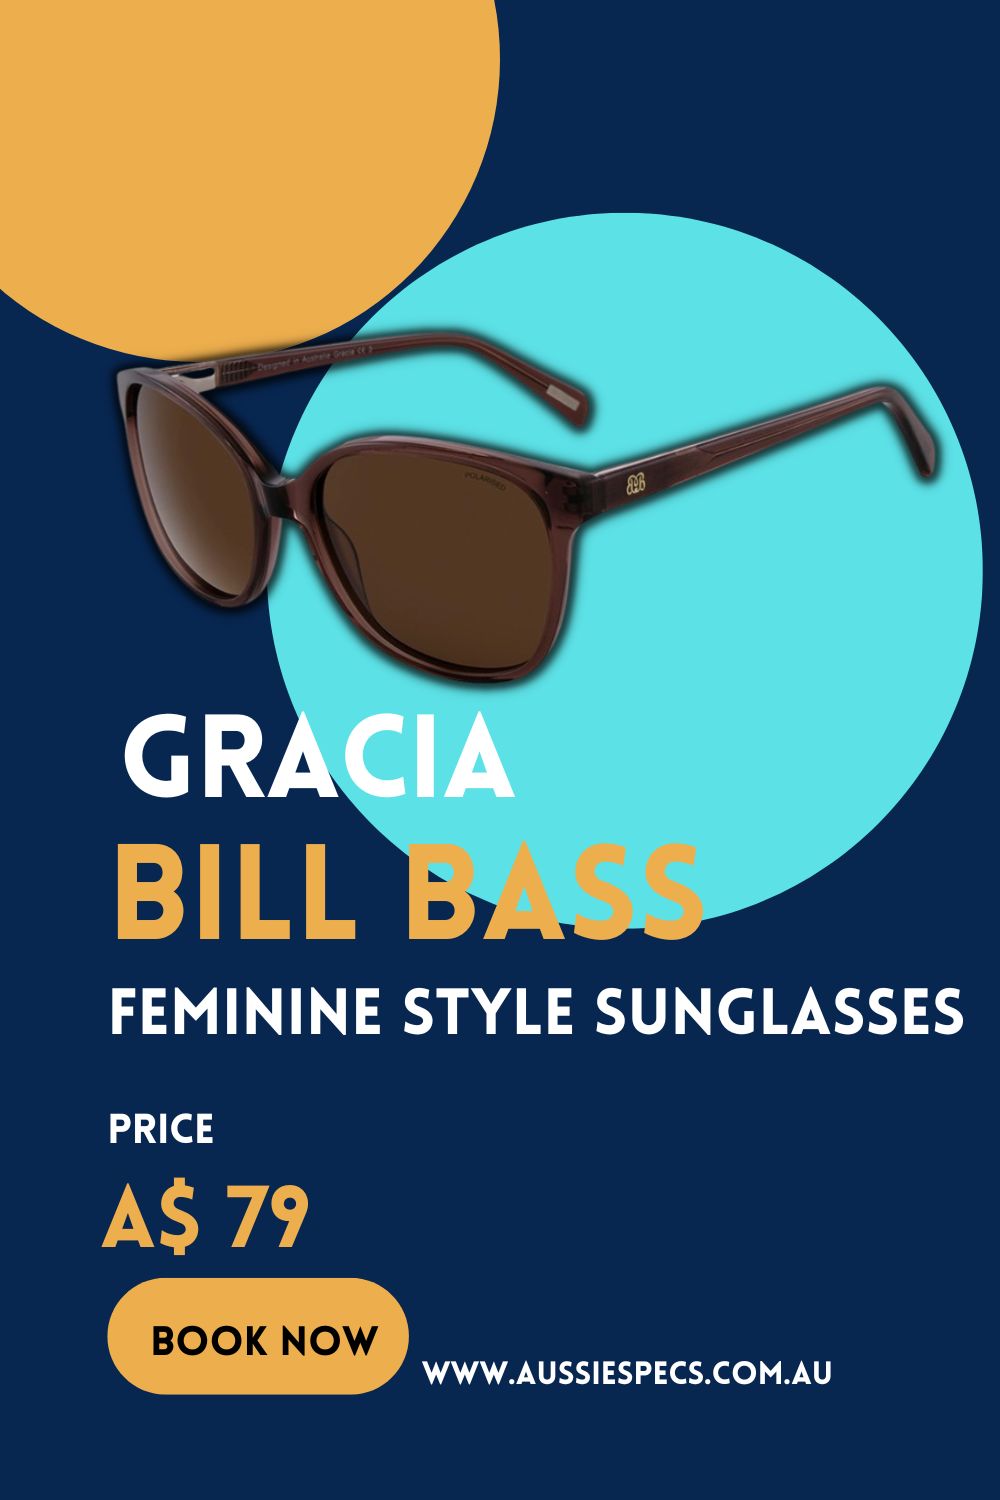 Bill Bass Gracia | Buy Sunglasses Coffs Harbour